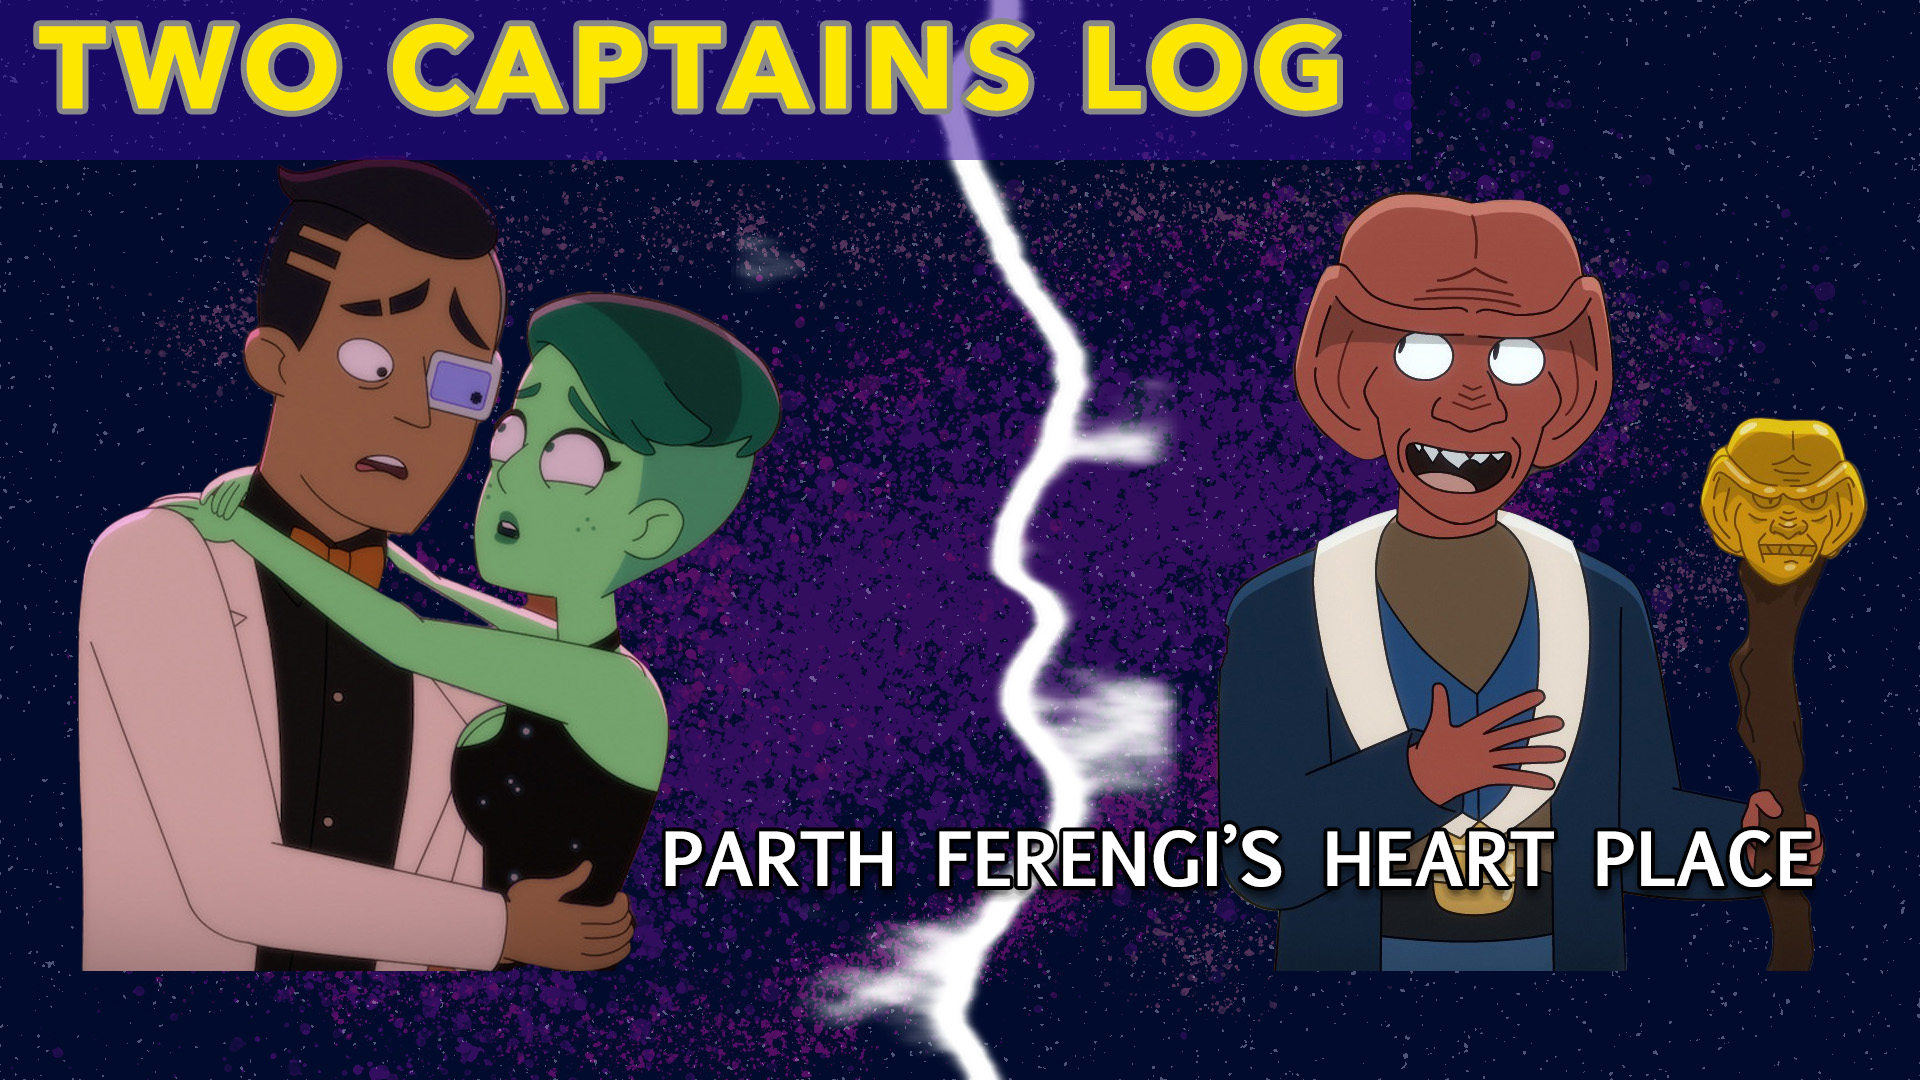 Two Captains Log: “Star Trek: Lower Decks” S4E6 – “Parth Ferengi’s Heart Place” Review